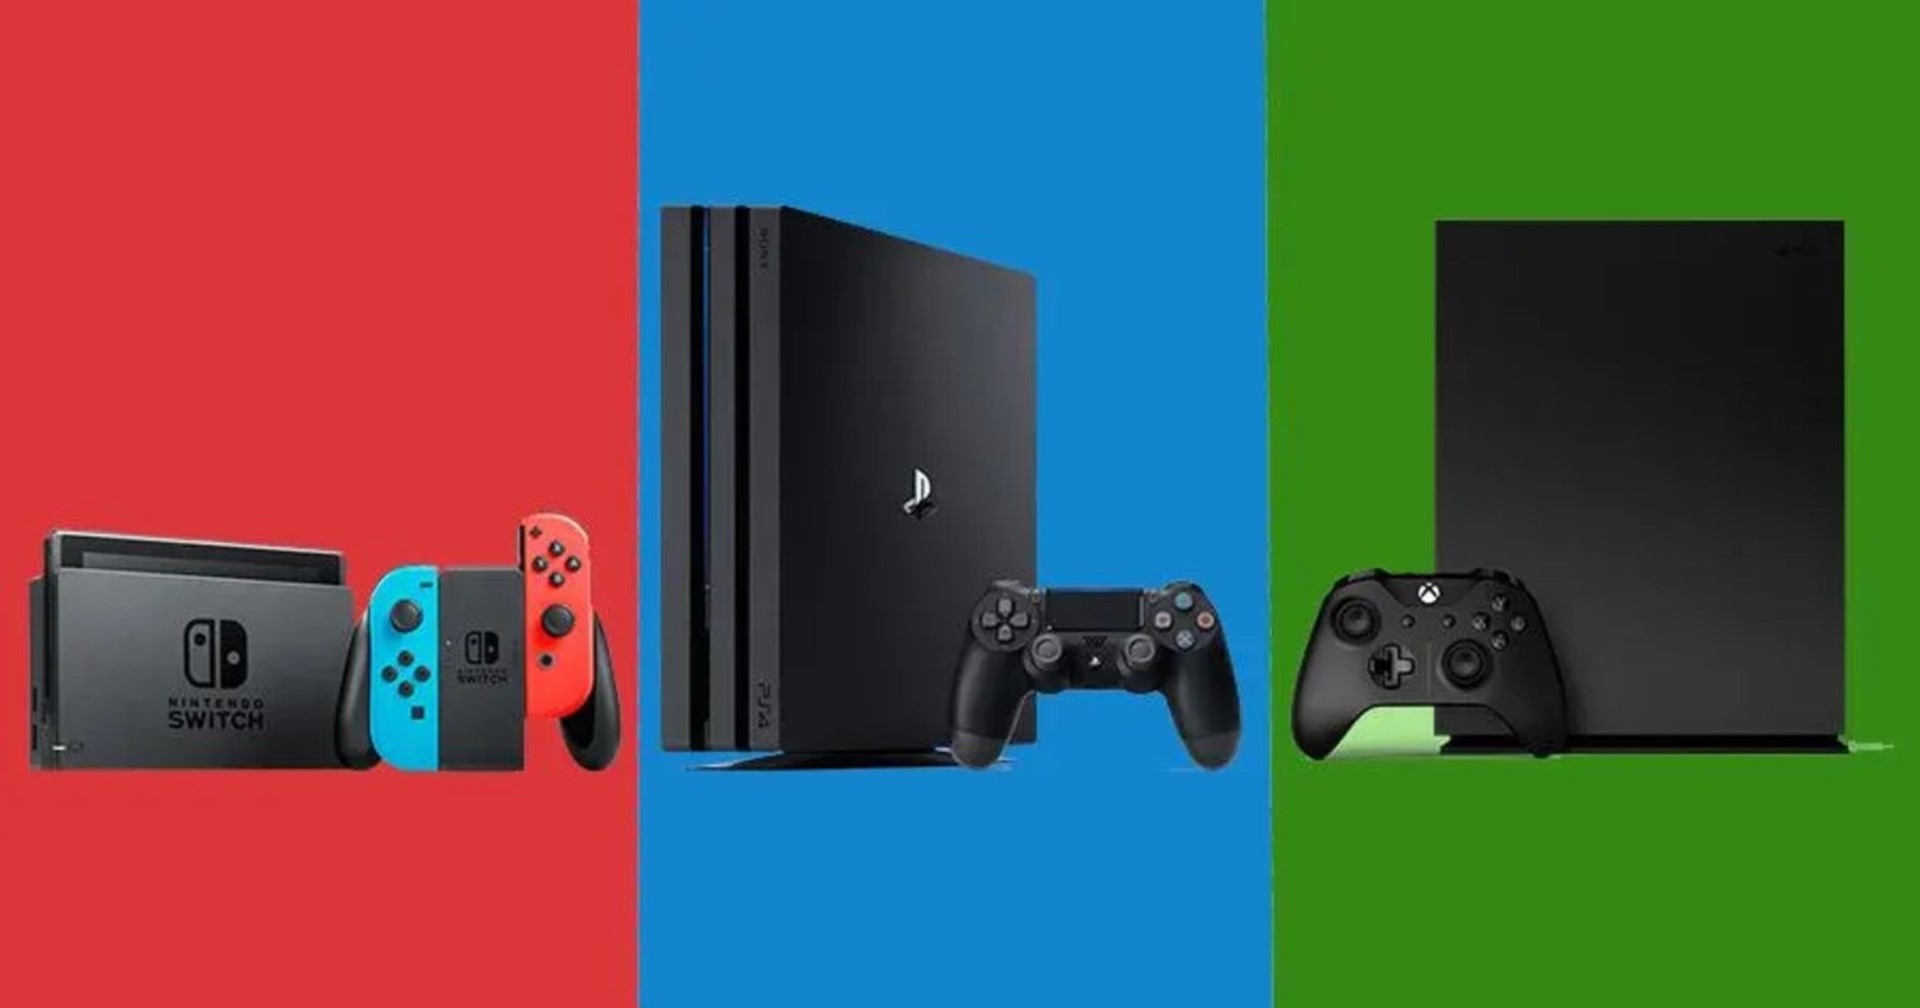 CEO ของ Activision บอกคอนโซลรุ่นต่อไปของ Nintendo จะมีสเปกเท่า PS4 และ Xbox One